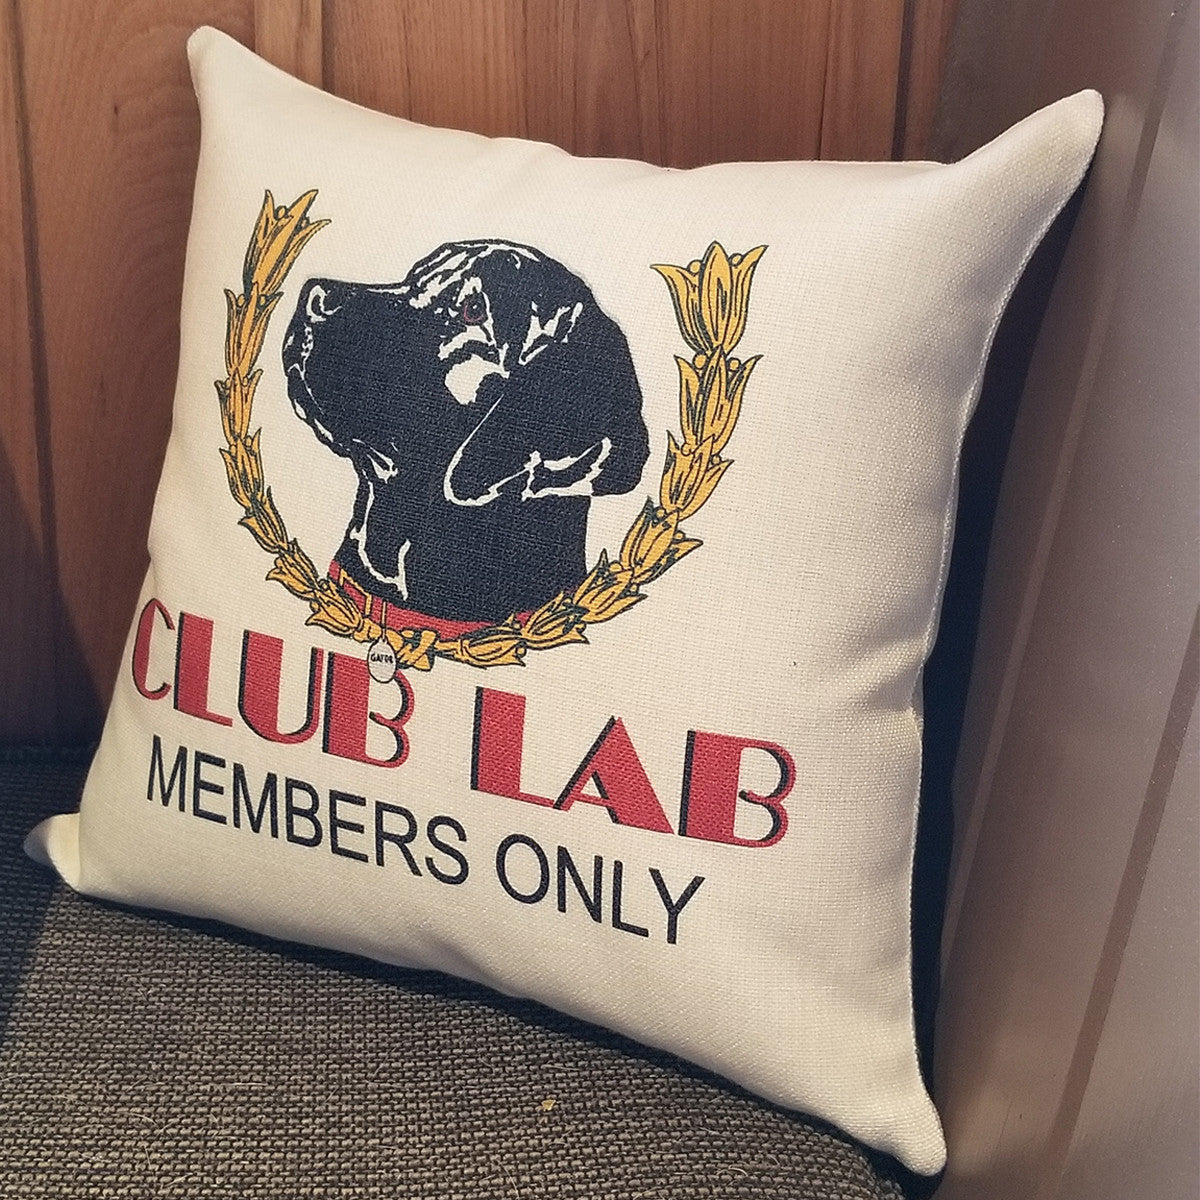 Club Lab Pillow with Black Lab